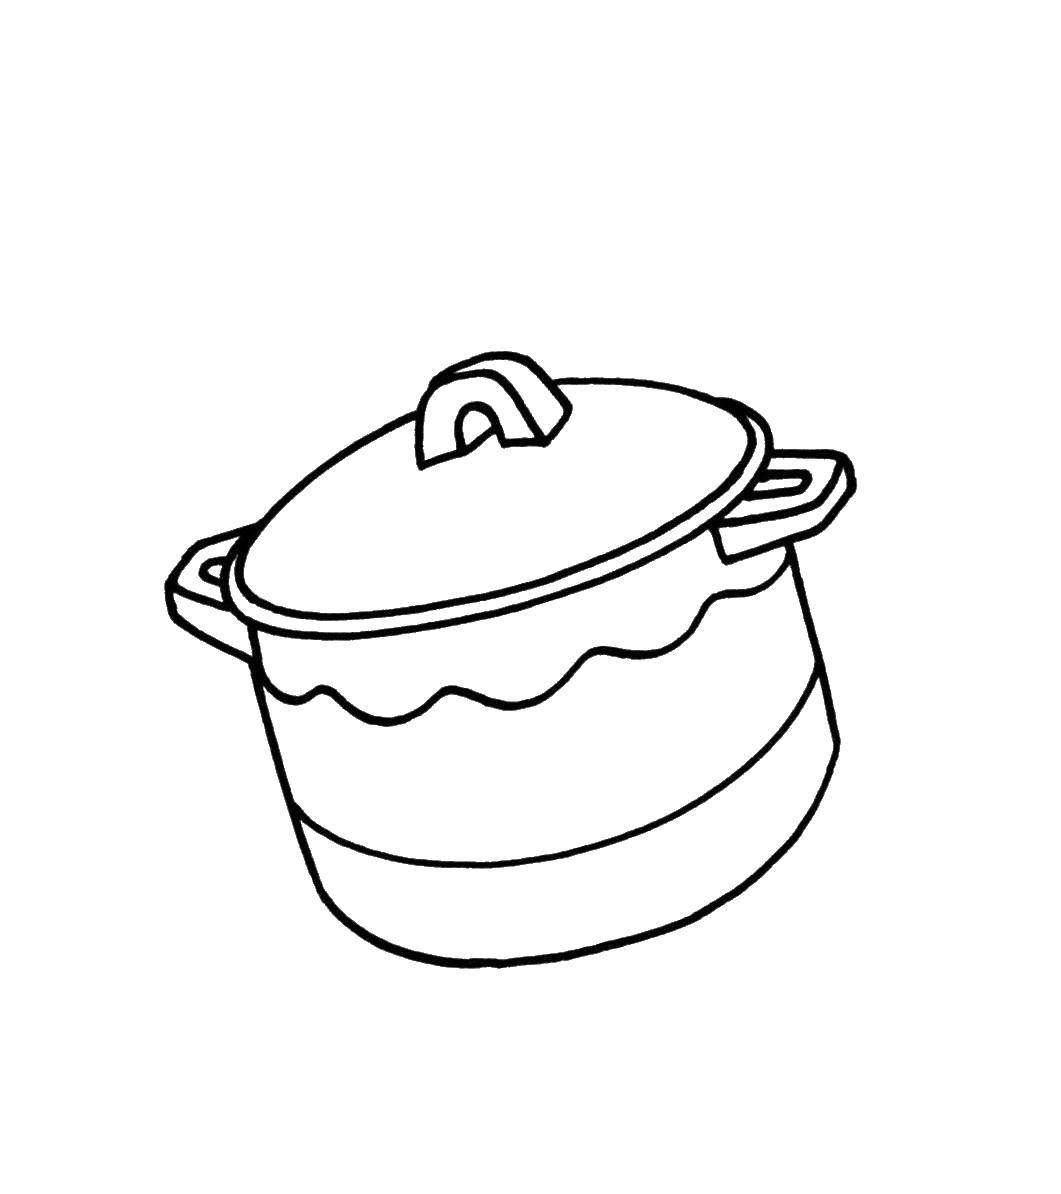 Раскраски посуды чашки тарелки вилки ложки  Кострюля